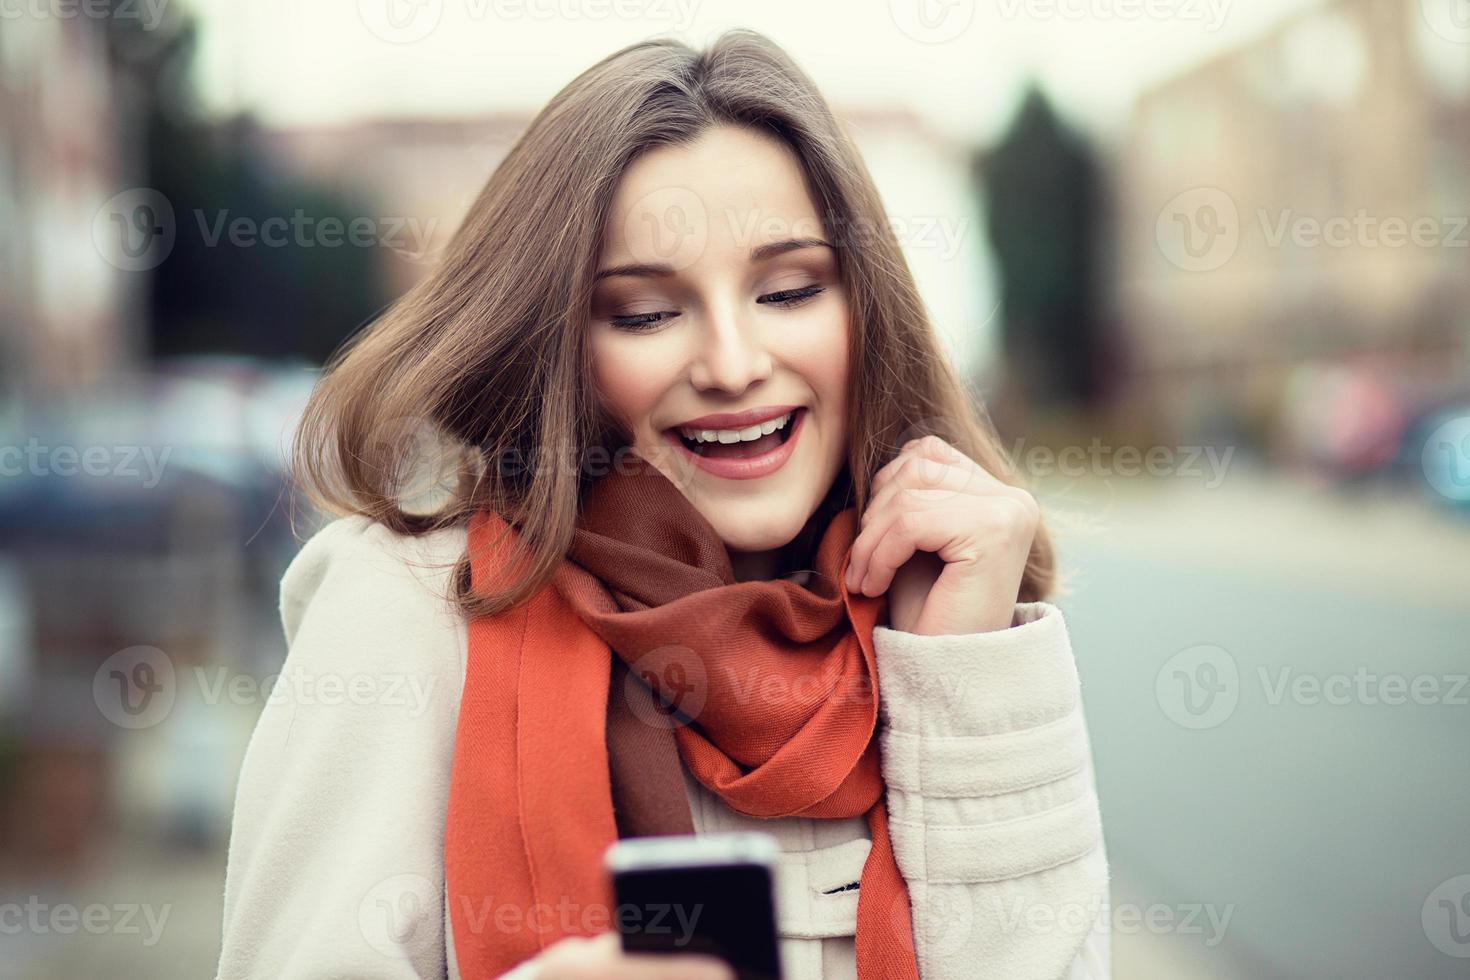 mensajes de texto de mujer. Primer plano joven feliz sonriente alegre hermosa mujer niña mirando móvil celular lectura enviando sms aislado paisaje urbano fondo al aire libre. expresión facial positiva emoción humana. multicultural, raza mixta, modelo ruso asiático foto